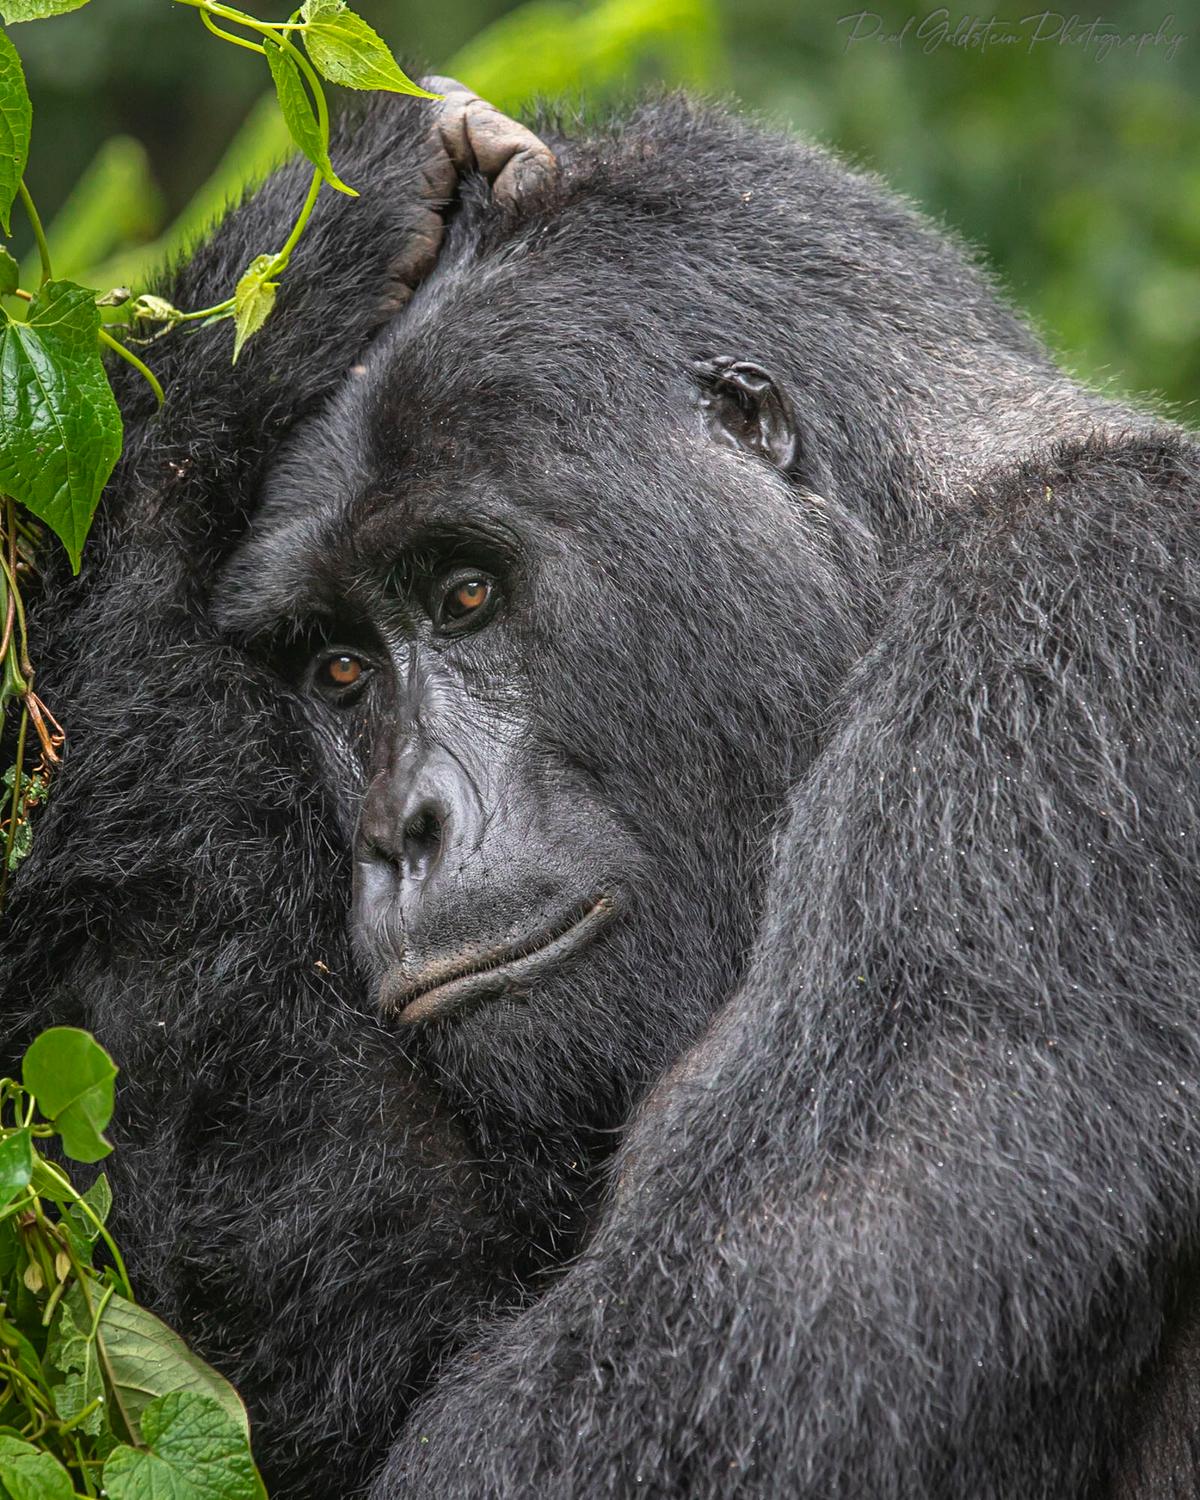 A gorilla. (Courtesy ofPaul Goldstein)